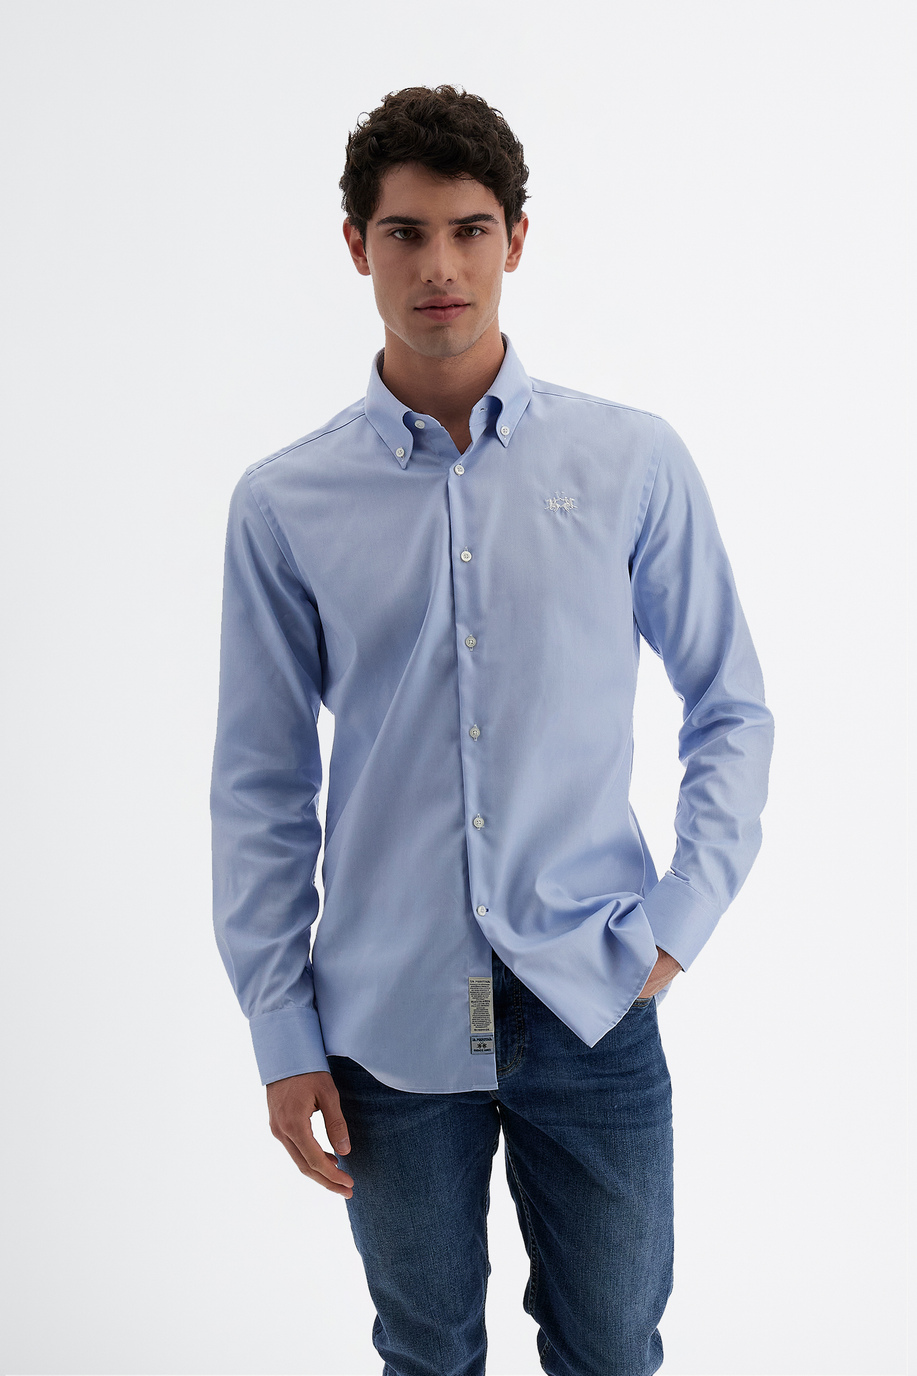 Camicia uomo Blue Ribbon in cotone a maniche lunghe regular fit - test 2 | La Martina - Official Online Shop